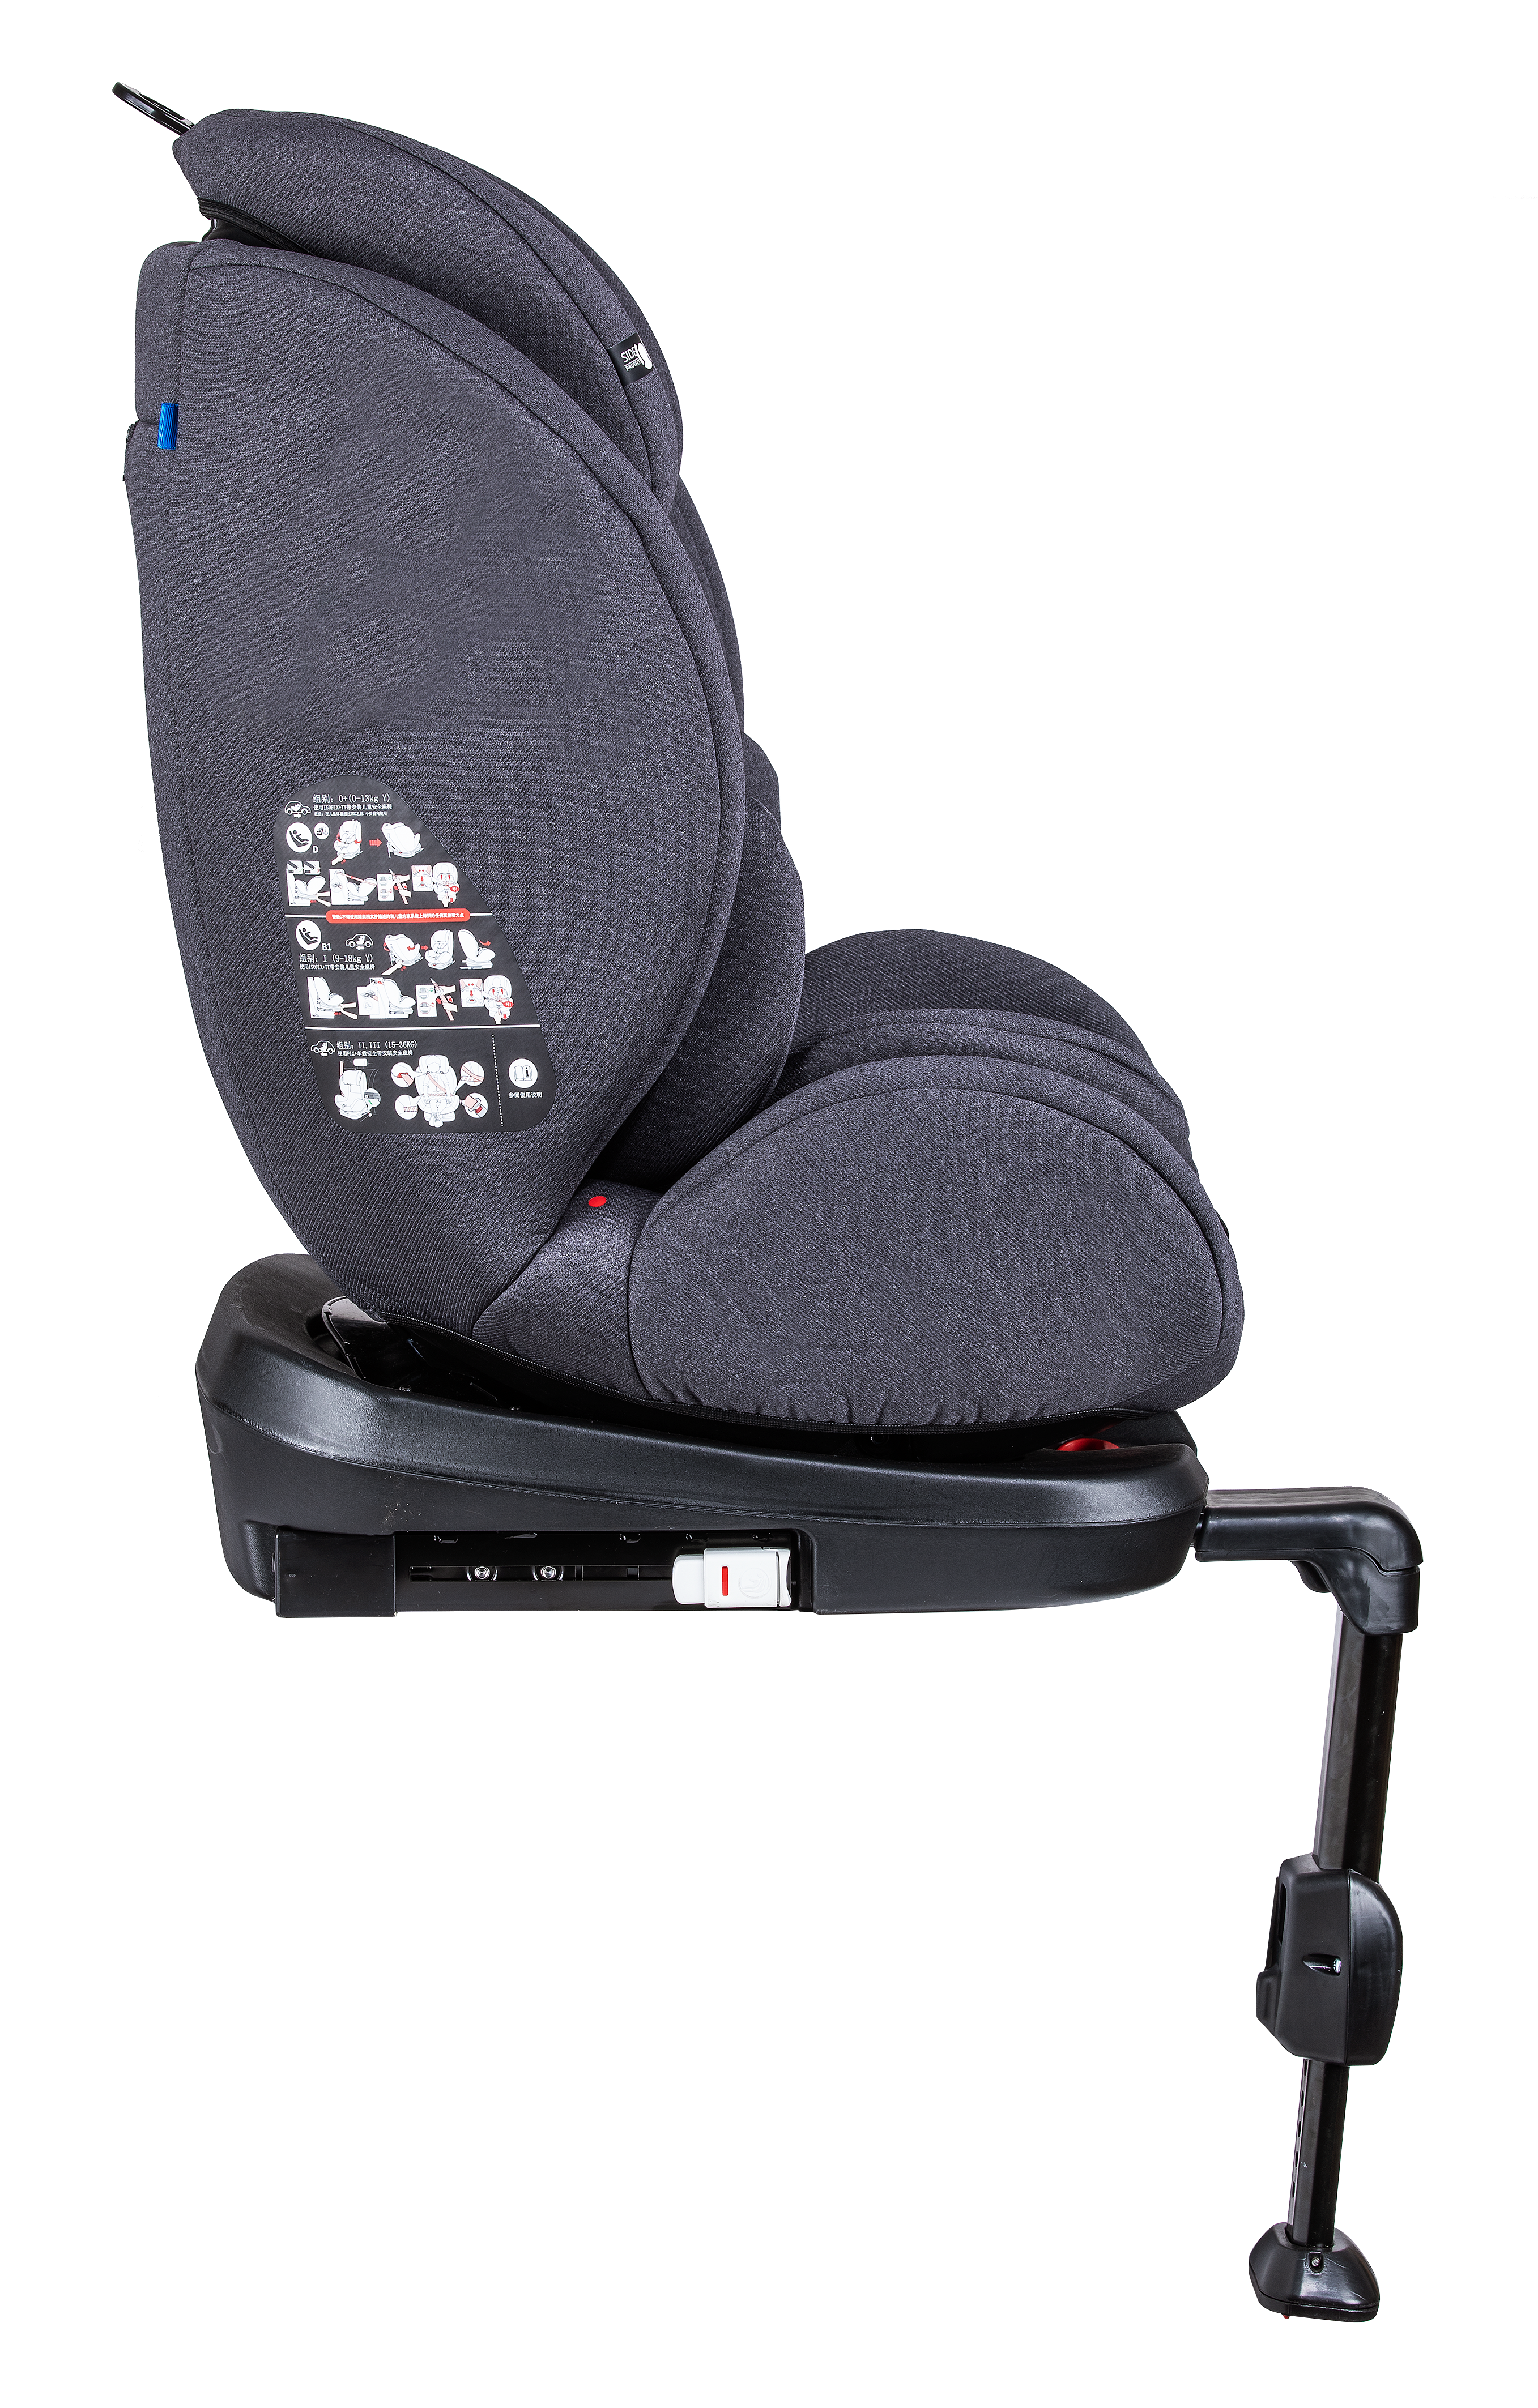 Rearward Facing I-Size Safety Baby Car Seat